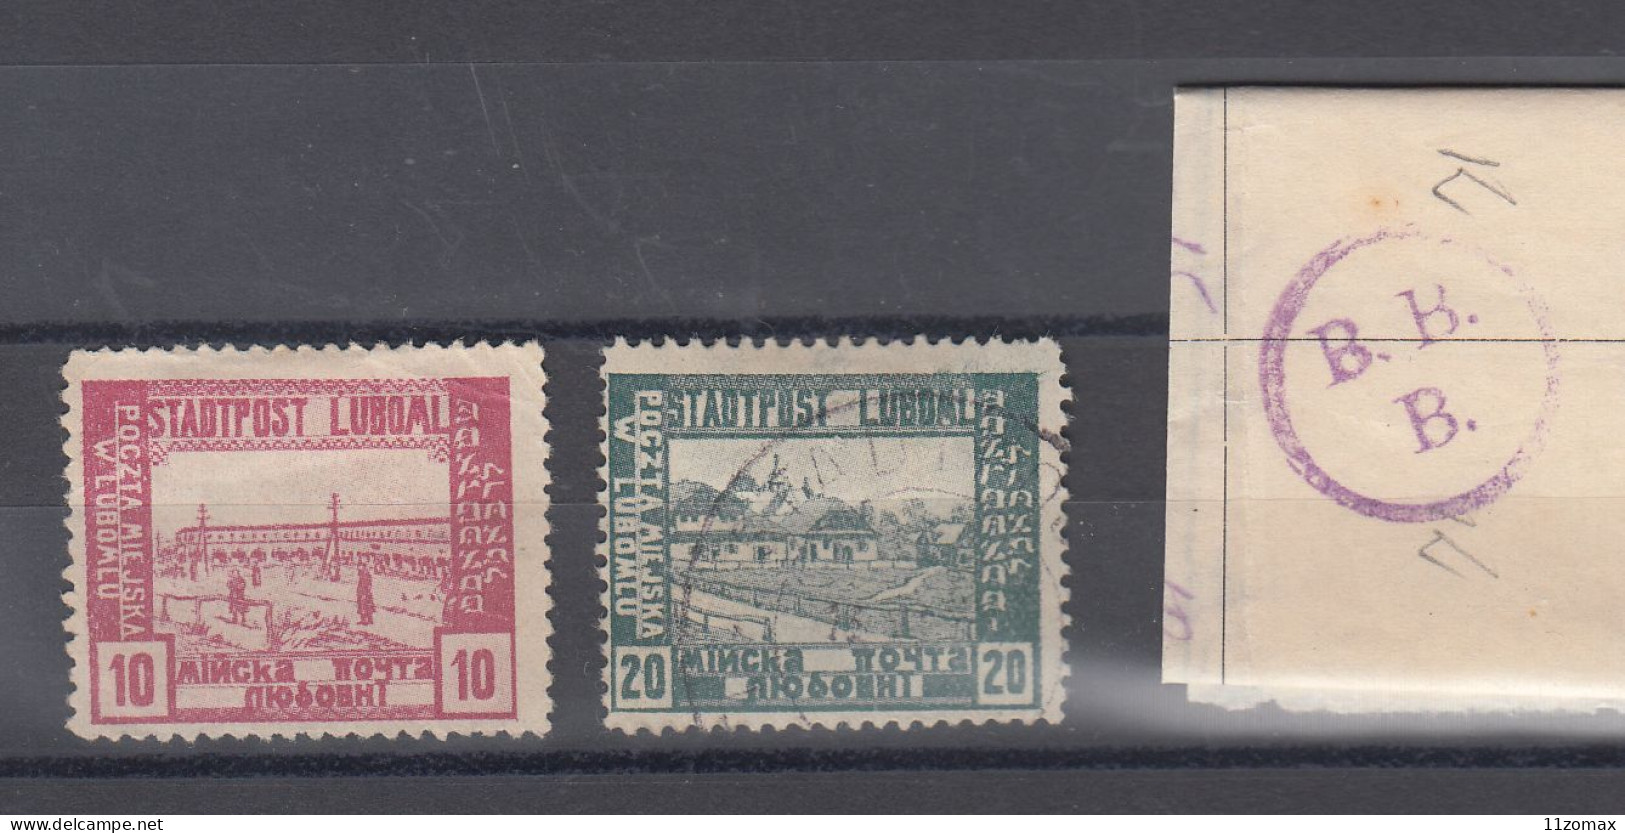 LUBOML LYUBOML Ukraina Now 1918. Lot Of 2 Stamps - VIPauction001 - Nuevos